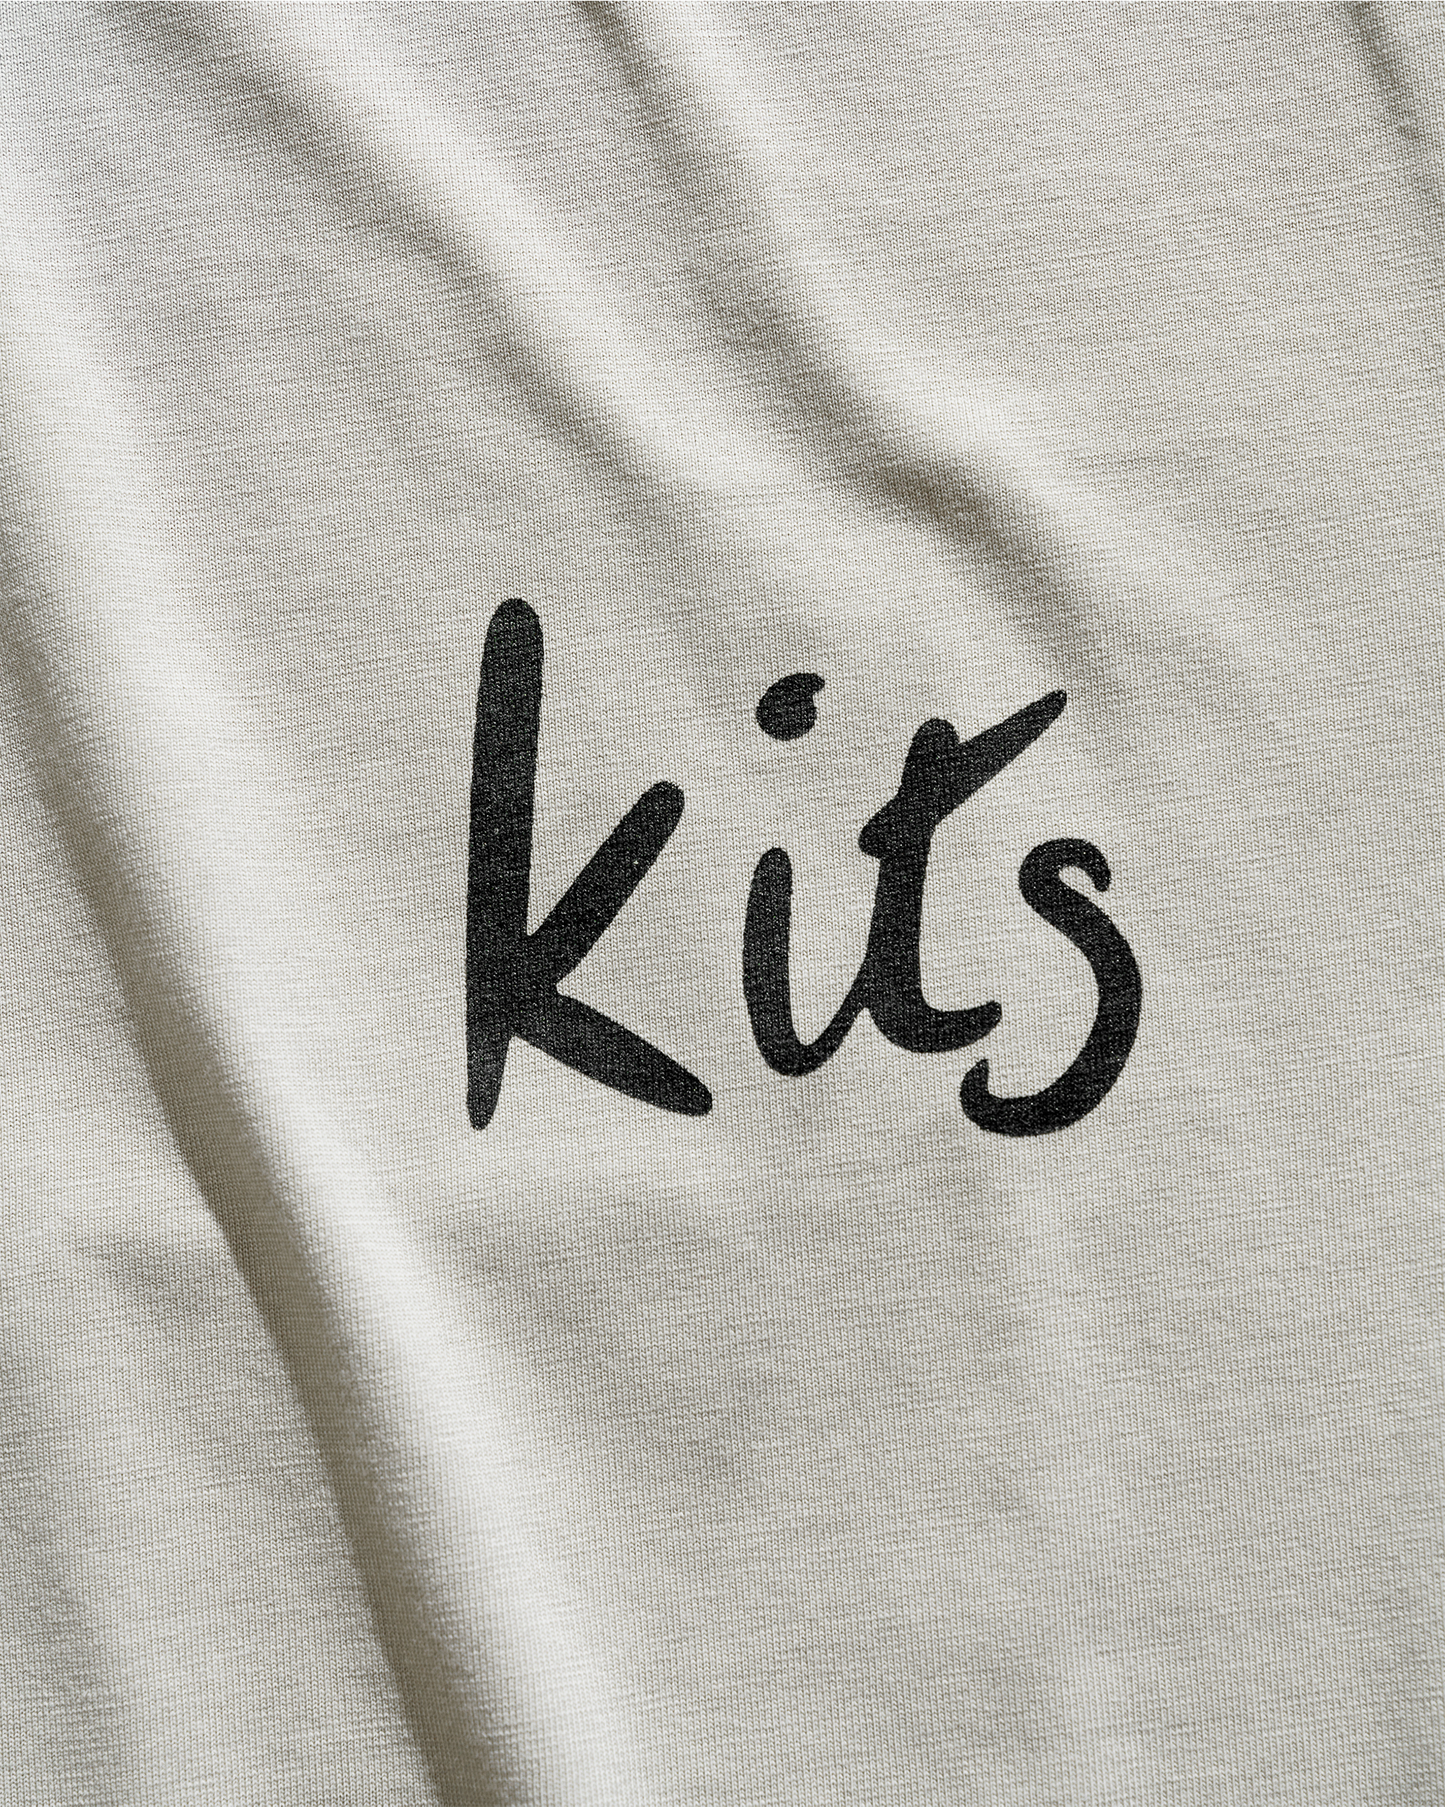 KITS t-shirt - Stone Grey